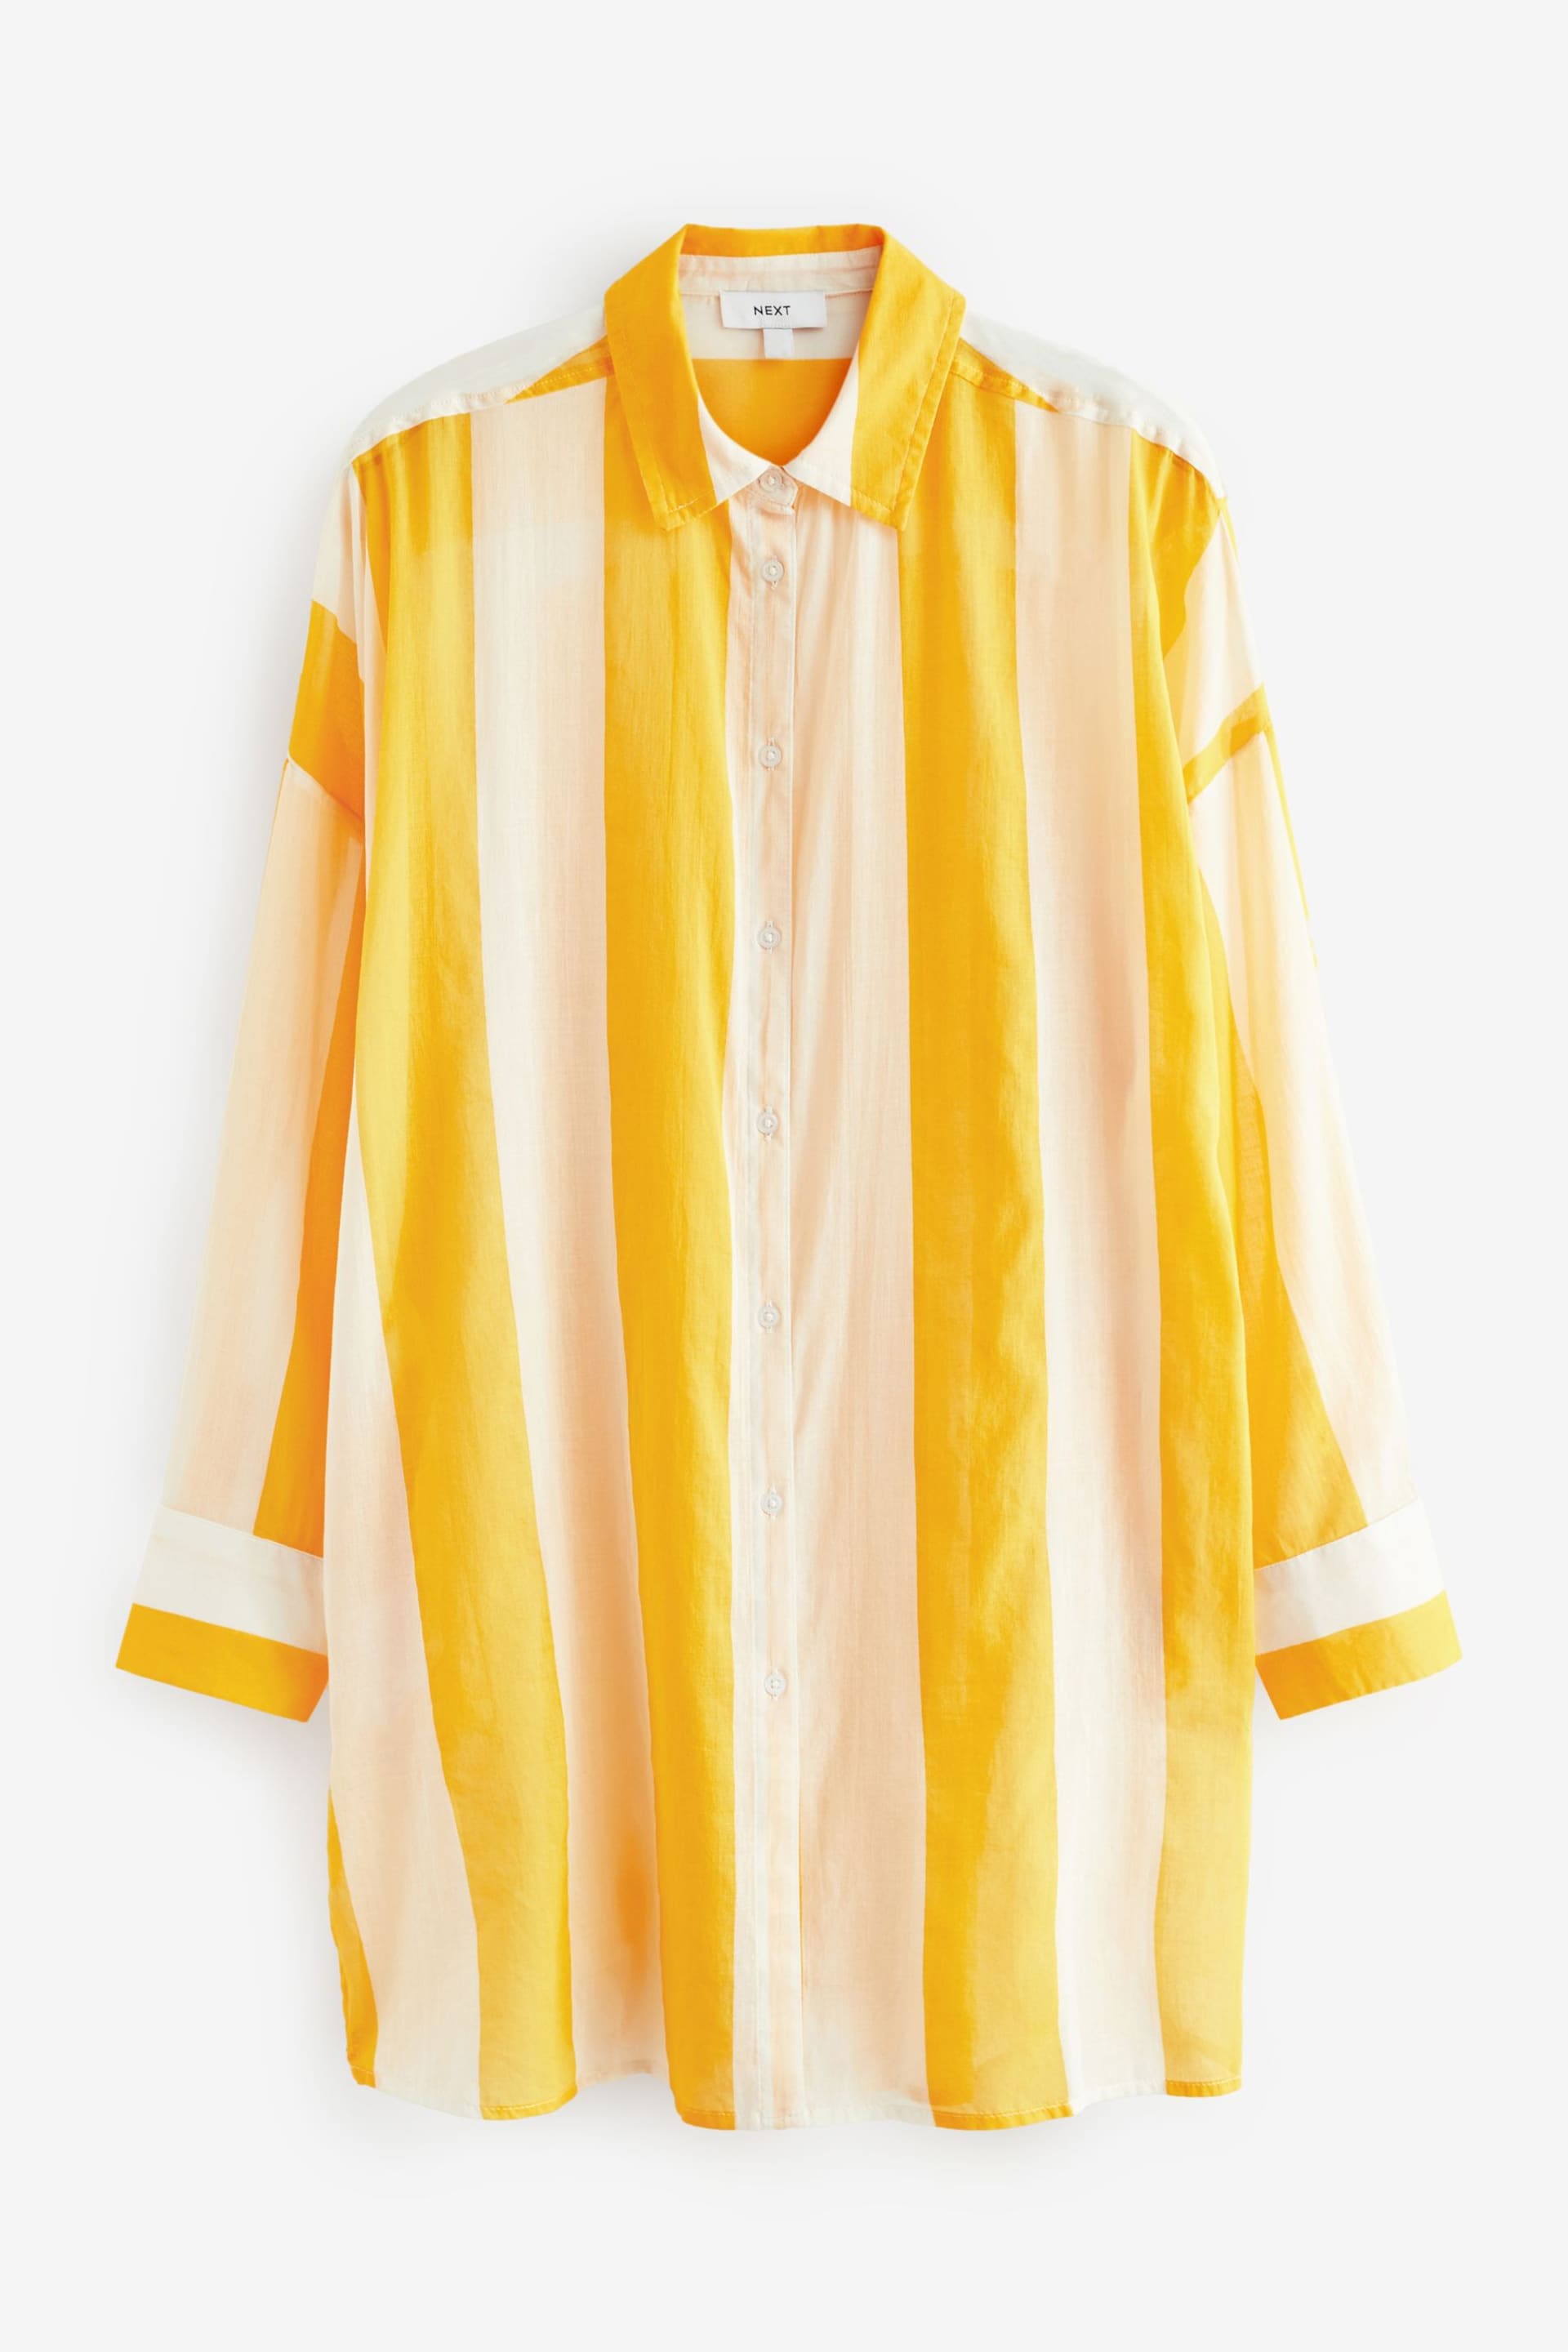 Yellow/White Stripe Beach Shirt Cover-Up - Image 6 of 7